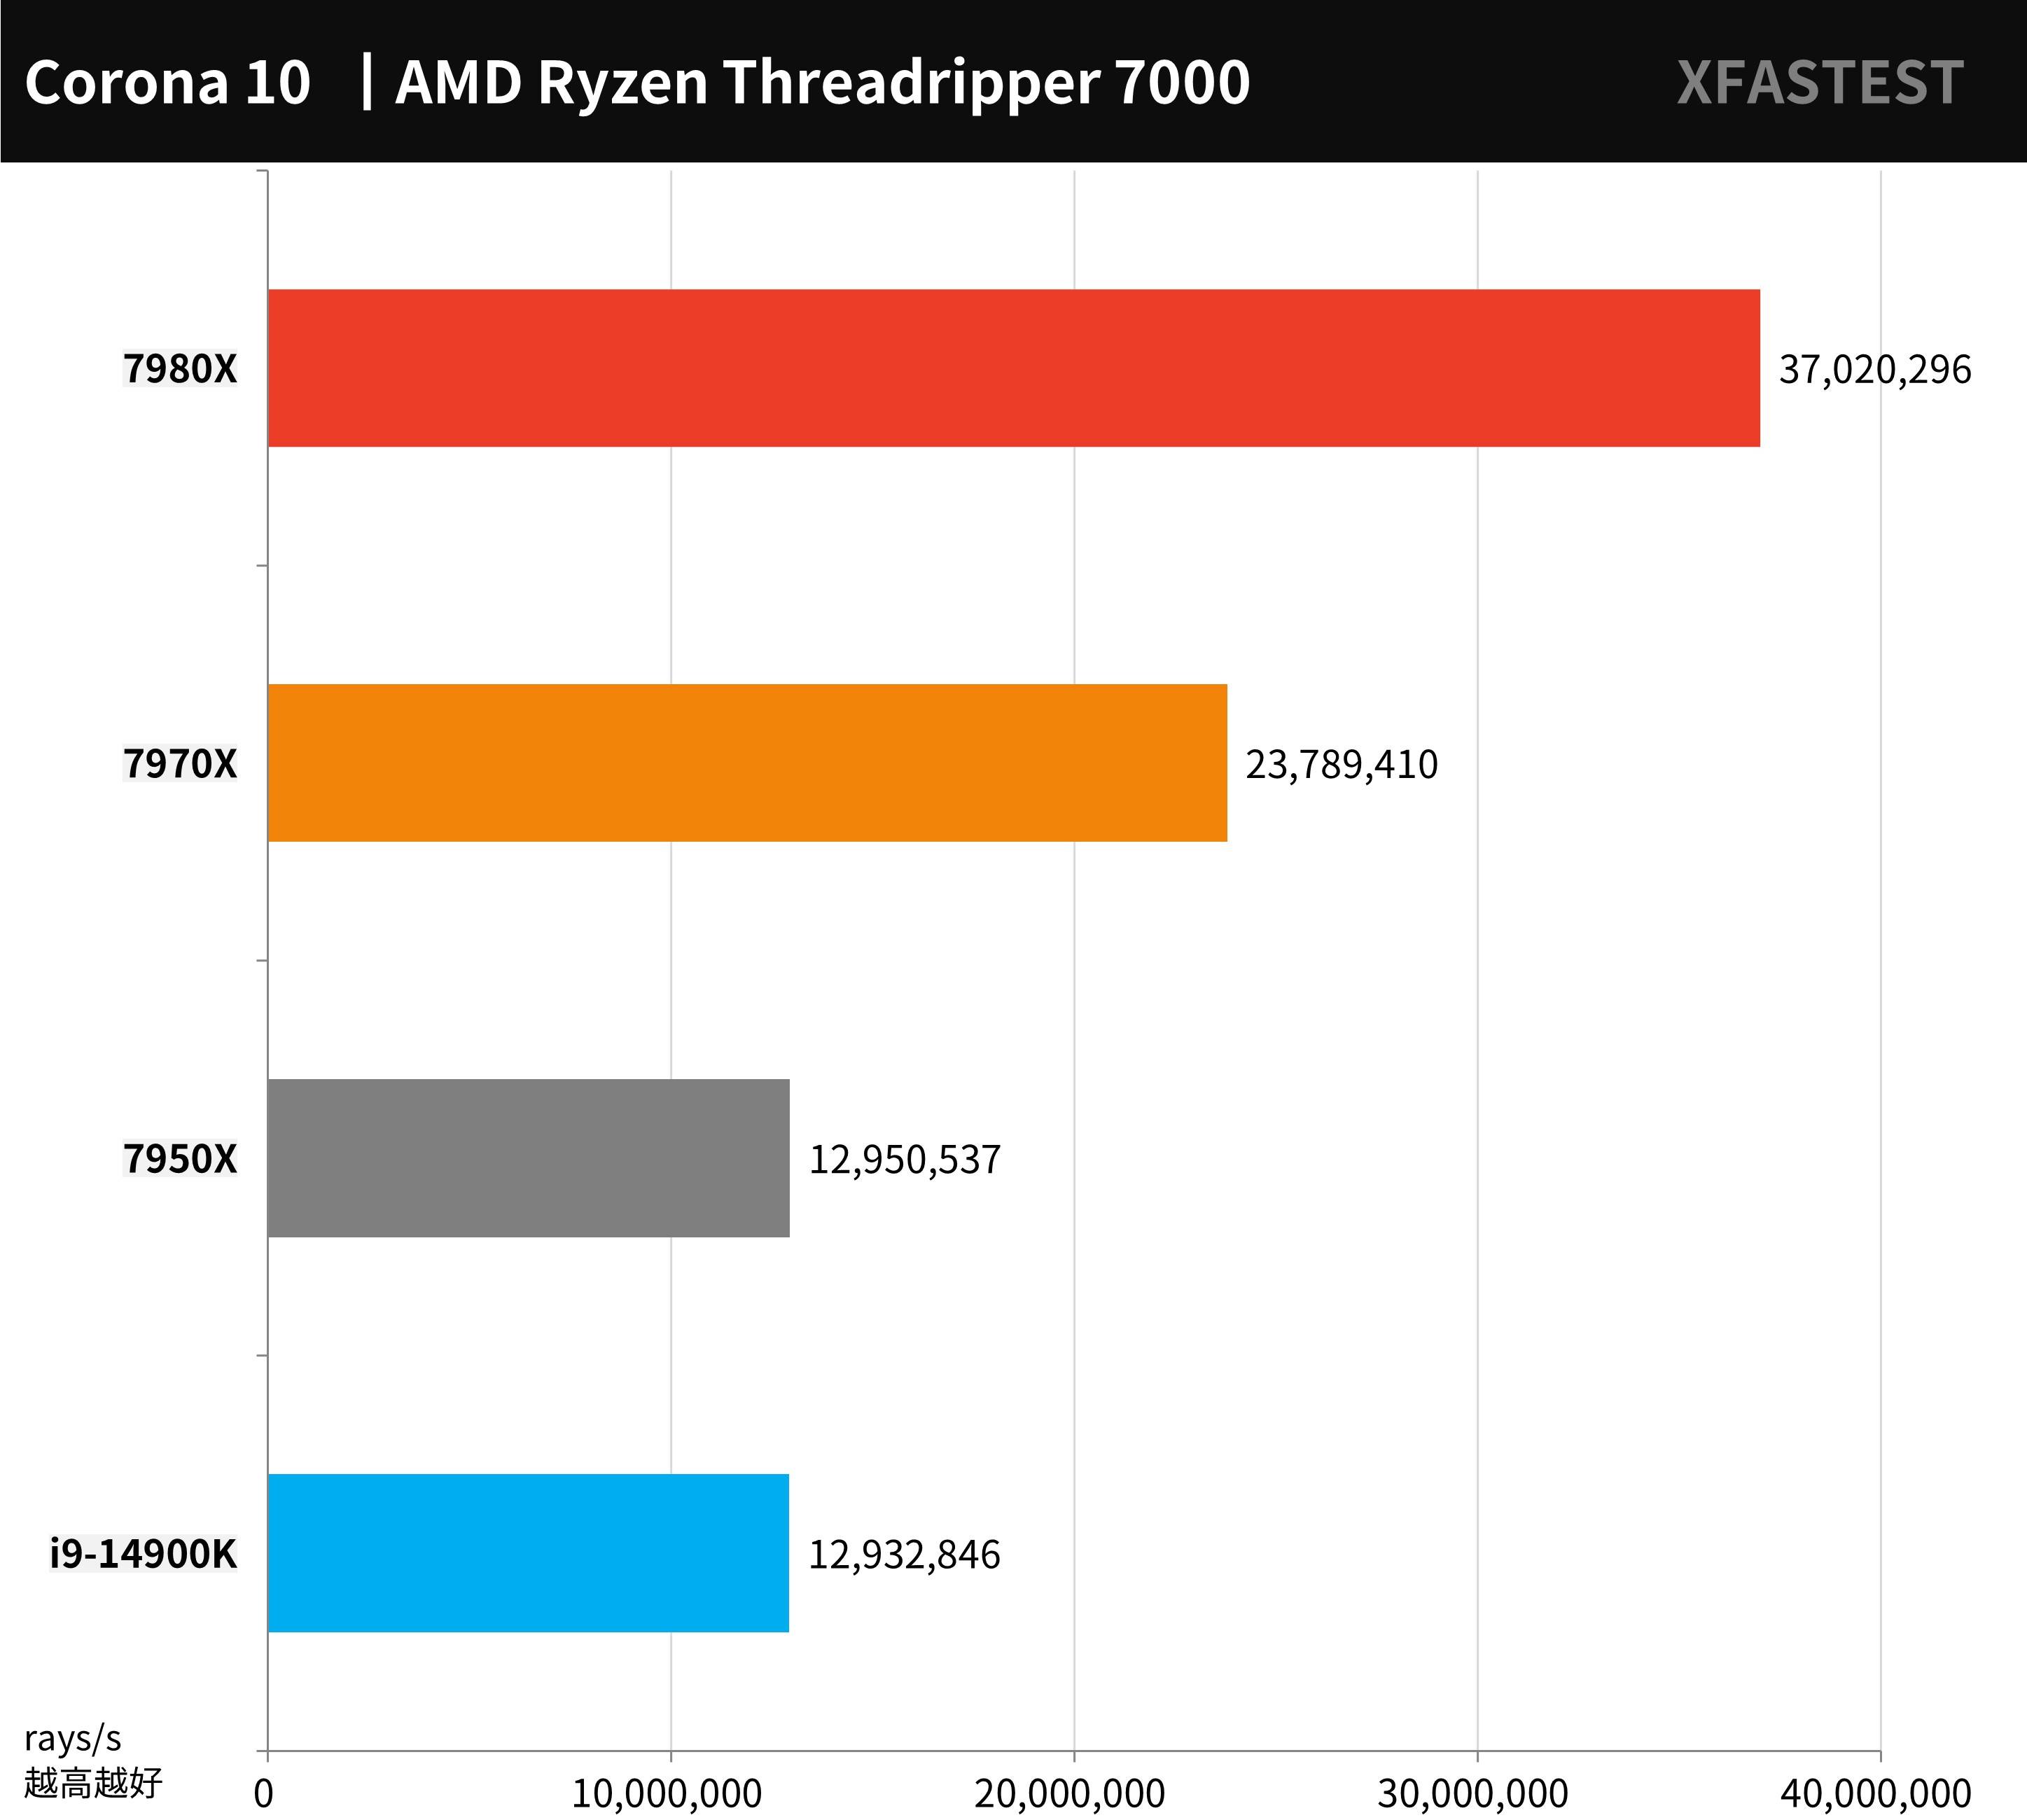 AMD Ryzen Threadripper 7980X， 7970X 测试报告 / TRX50， D5 RDIMM